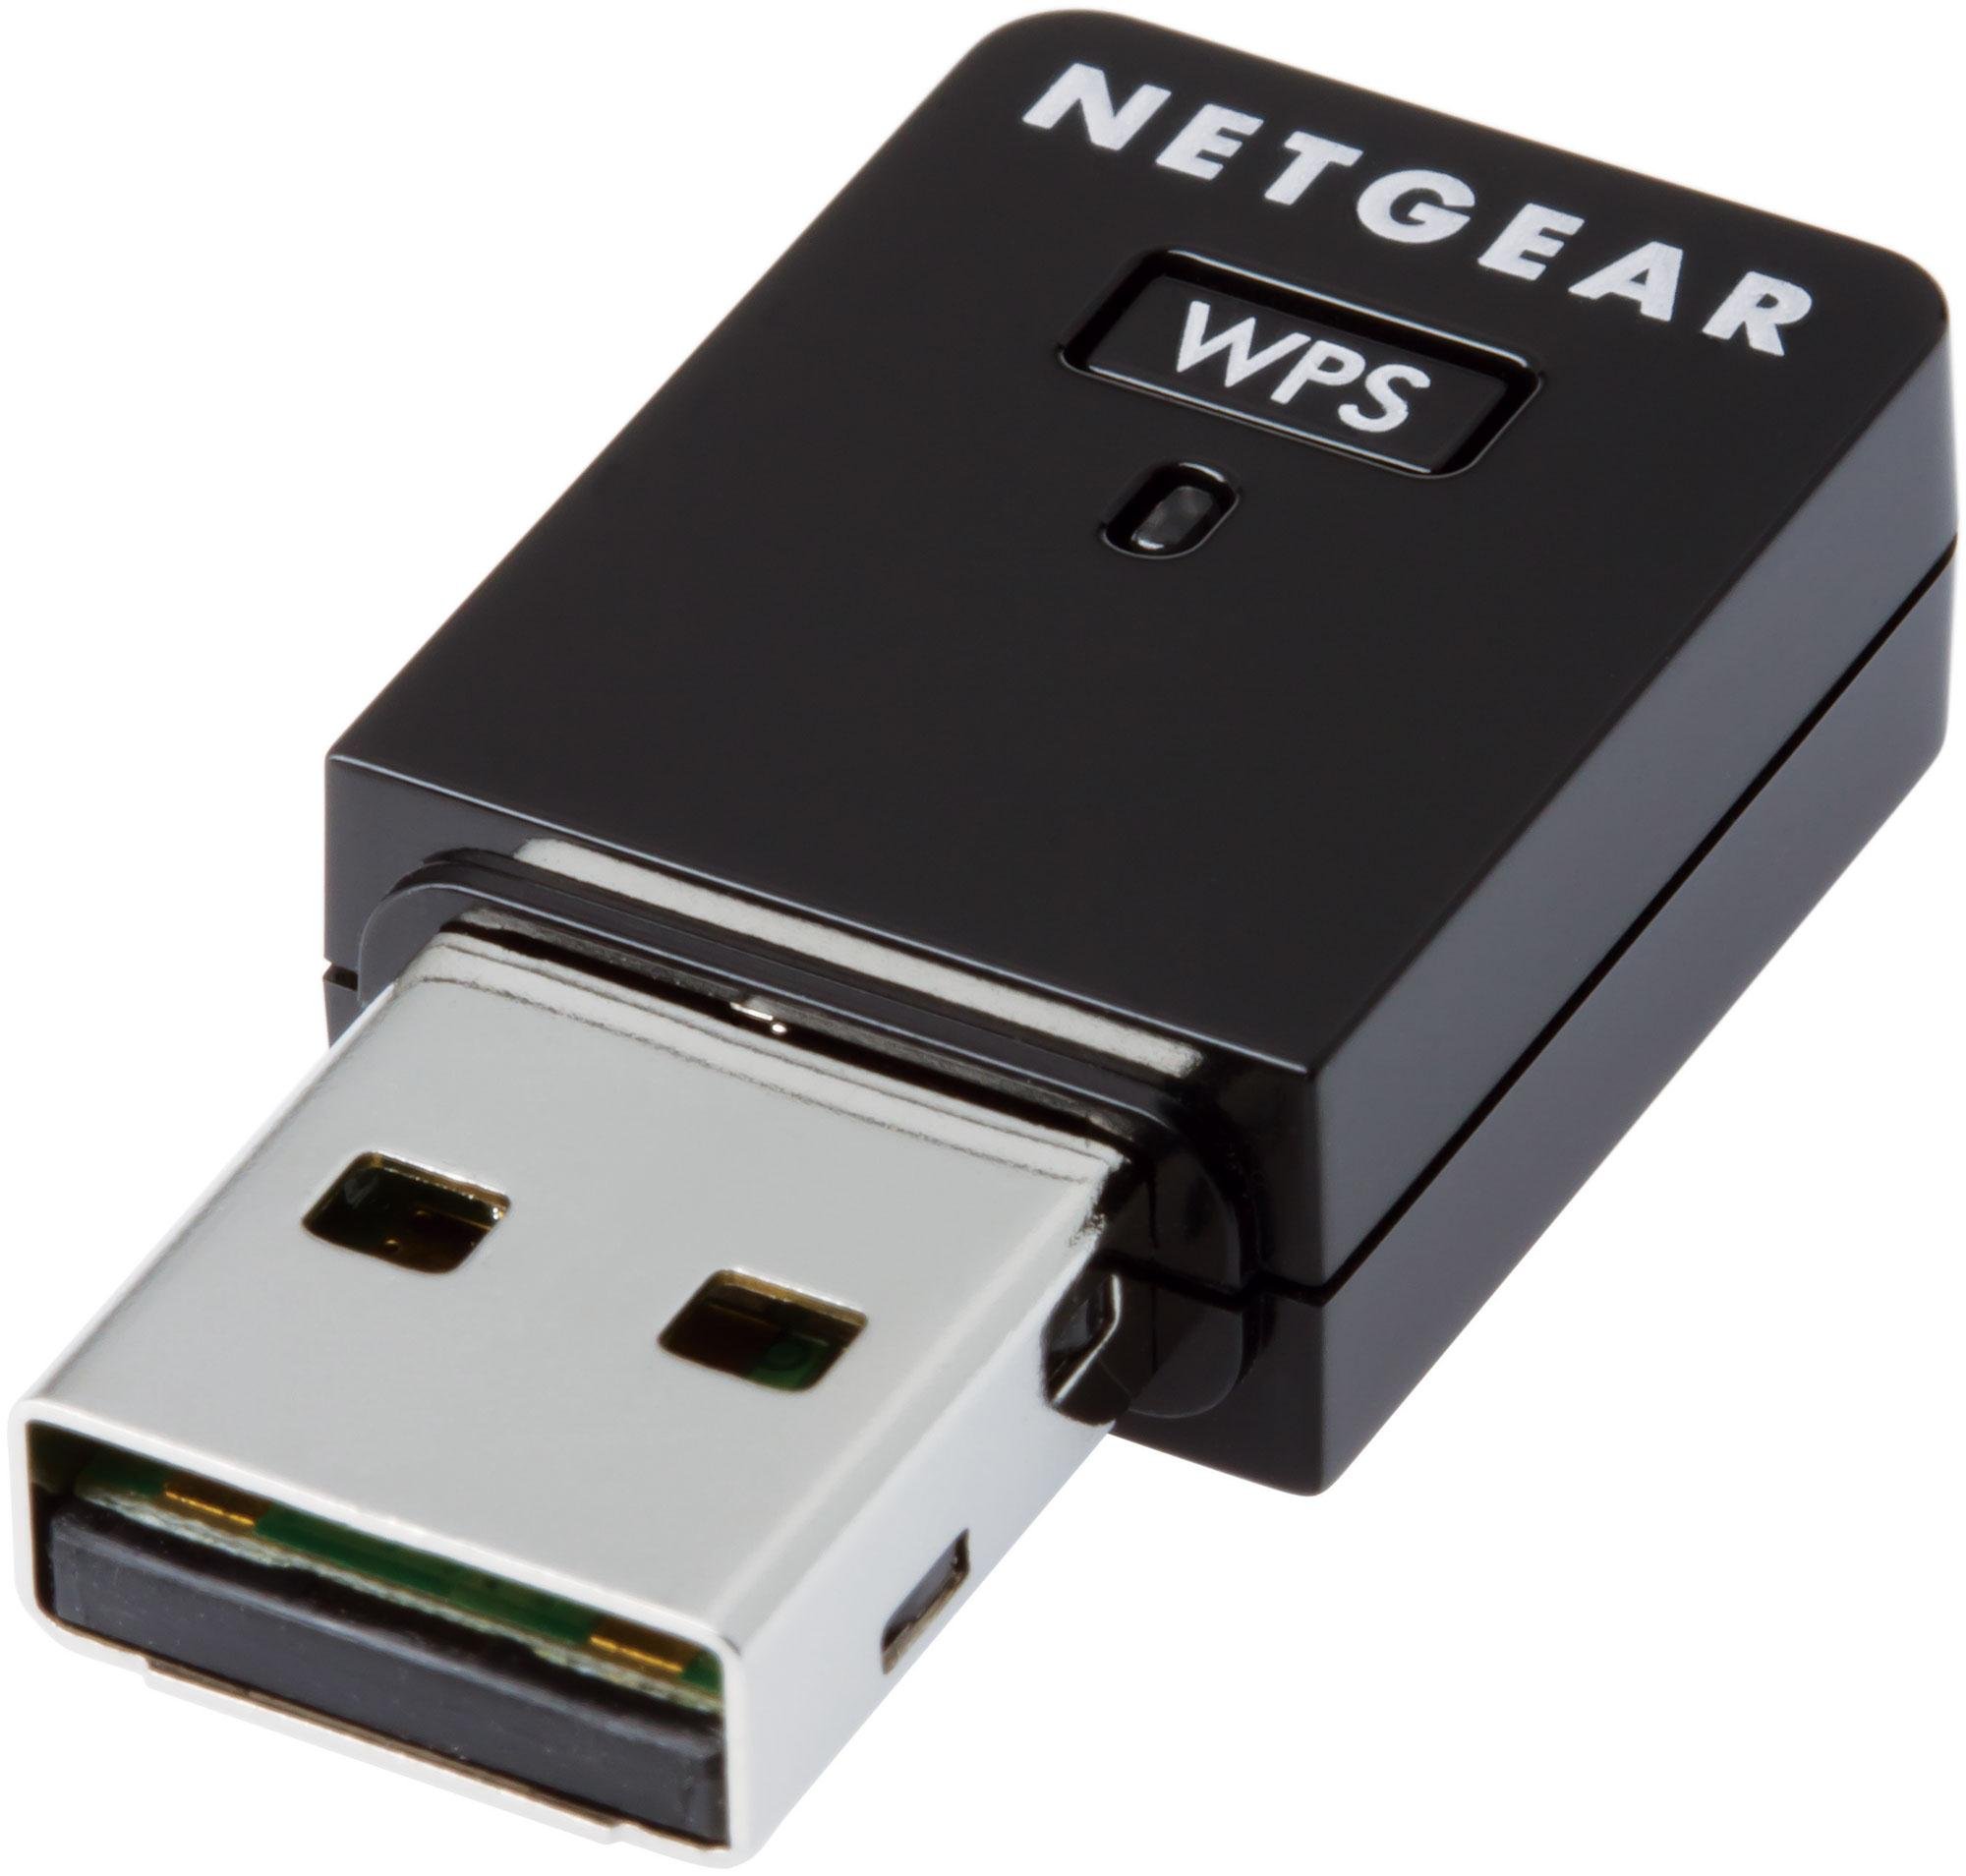 Netgear WNA3100M 300Mbps USB 2.0 WiFi Adapter - WNA3100M-100PES | CCL